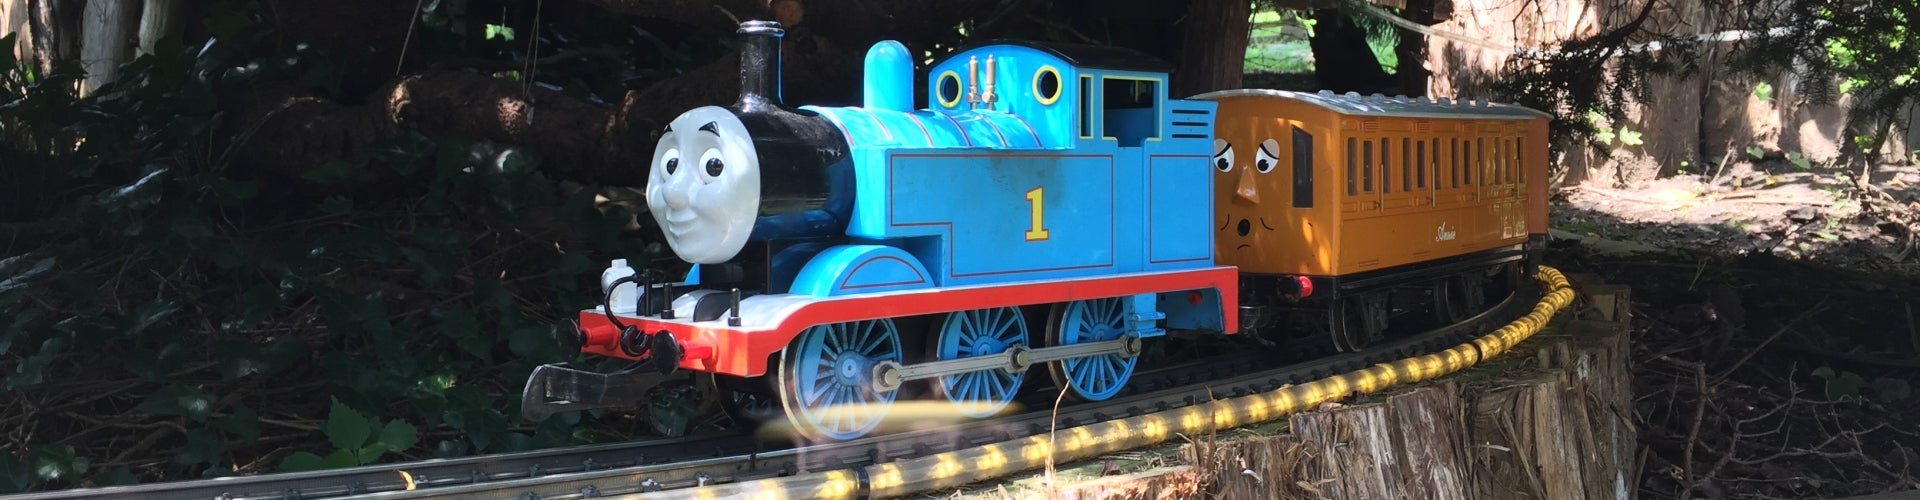 A miniature model train of Thomas the Tank Engine.